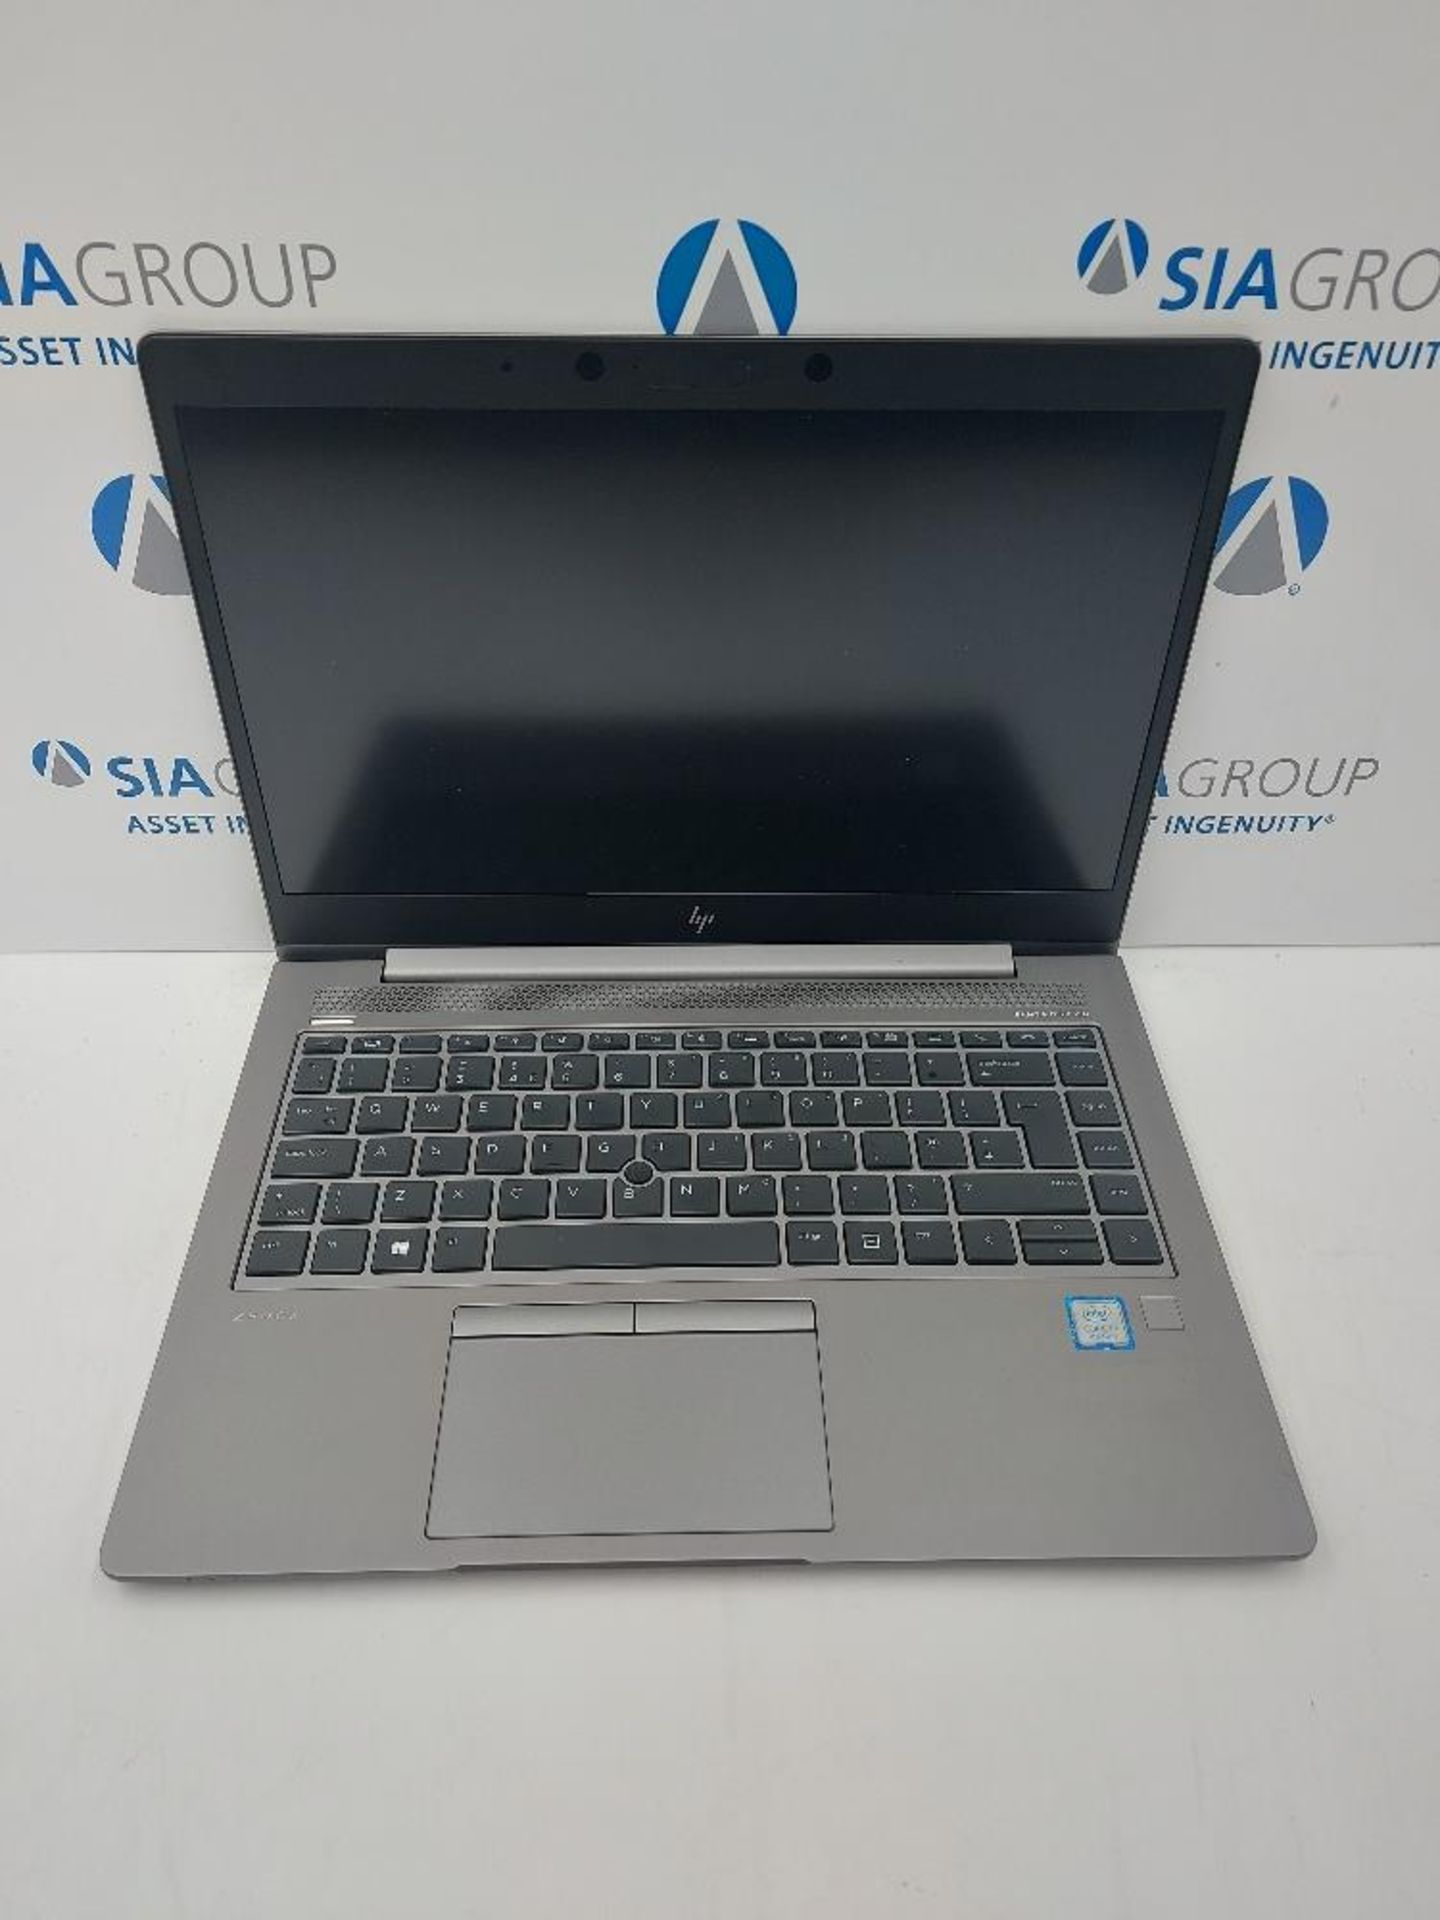 HP Zbook 14u G5 Laptop with Flight Case - Image 3 of 7